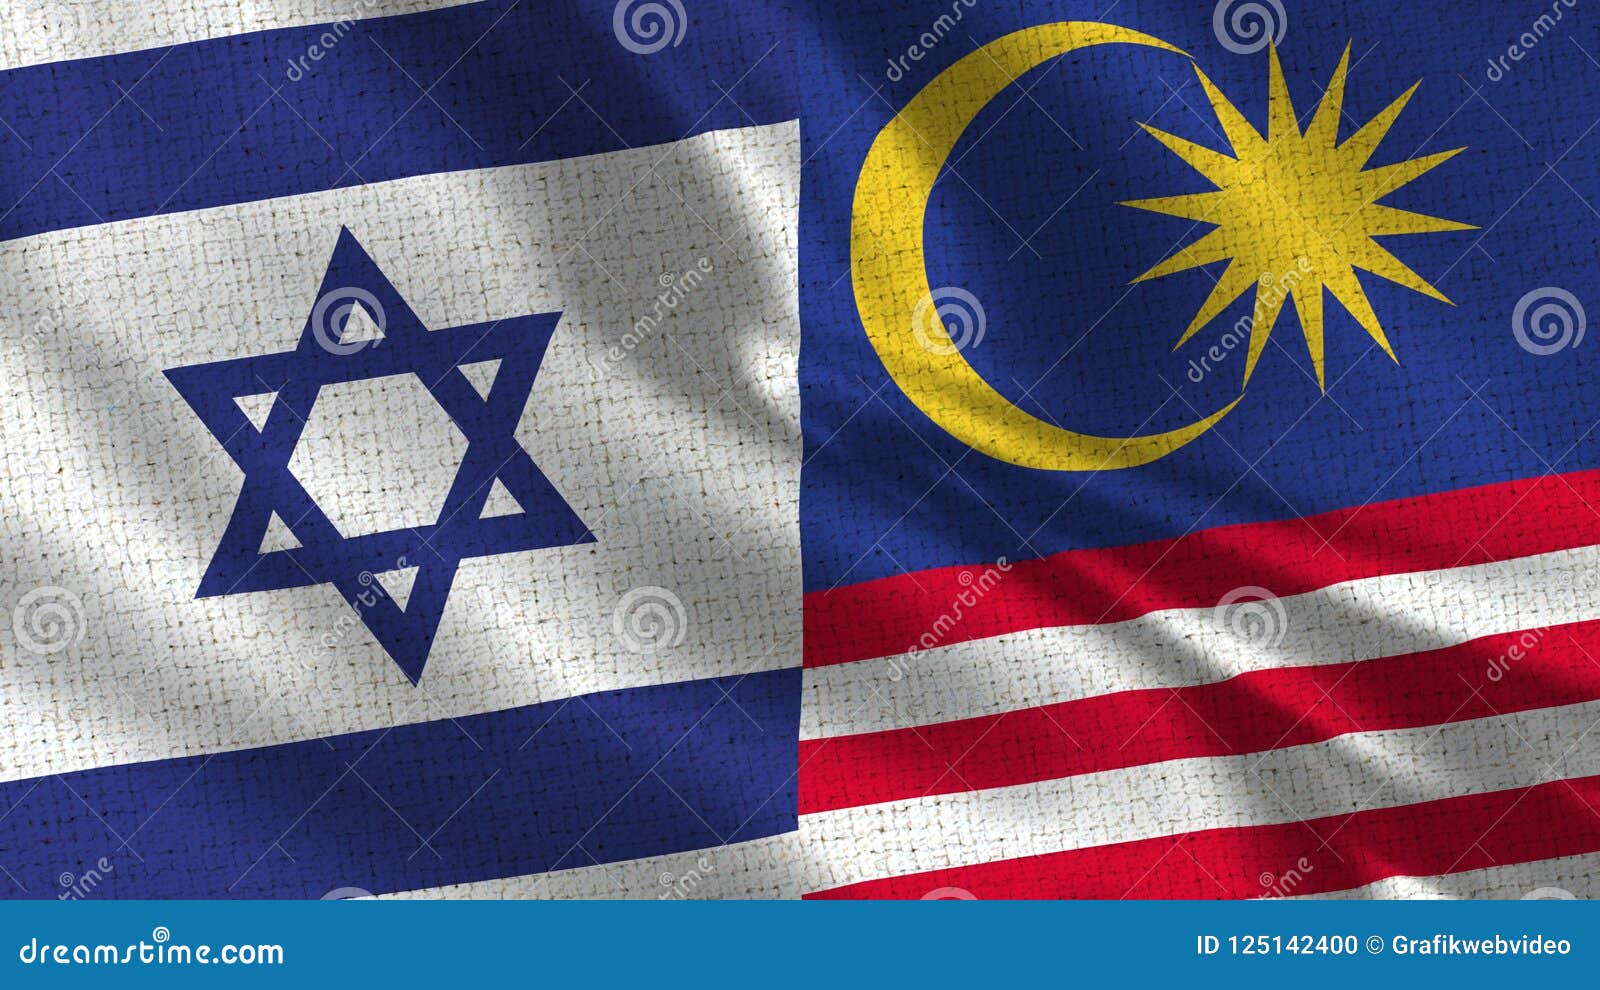 Malaysia israel Actually ah,